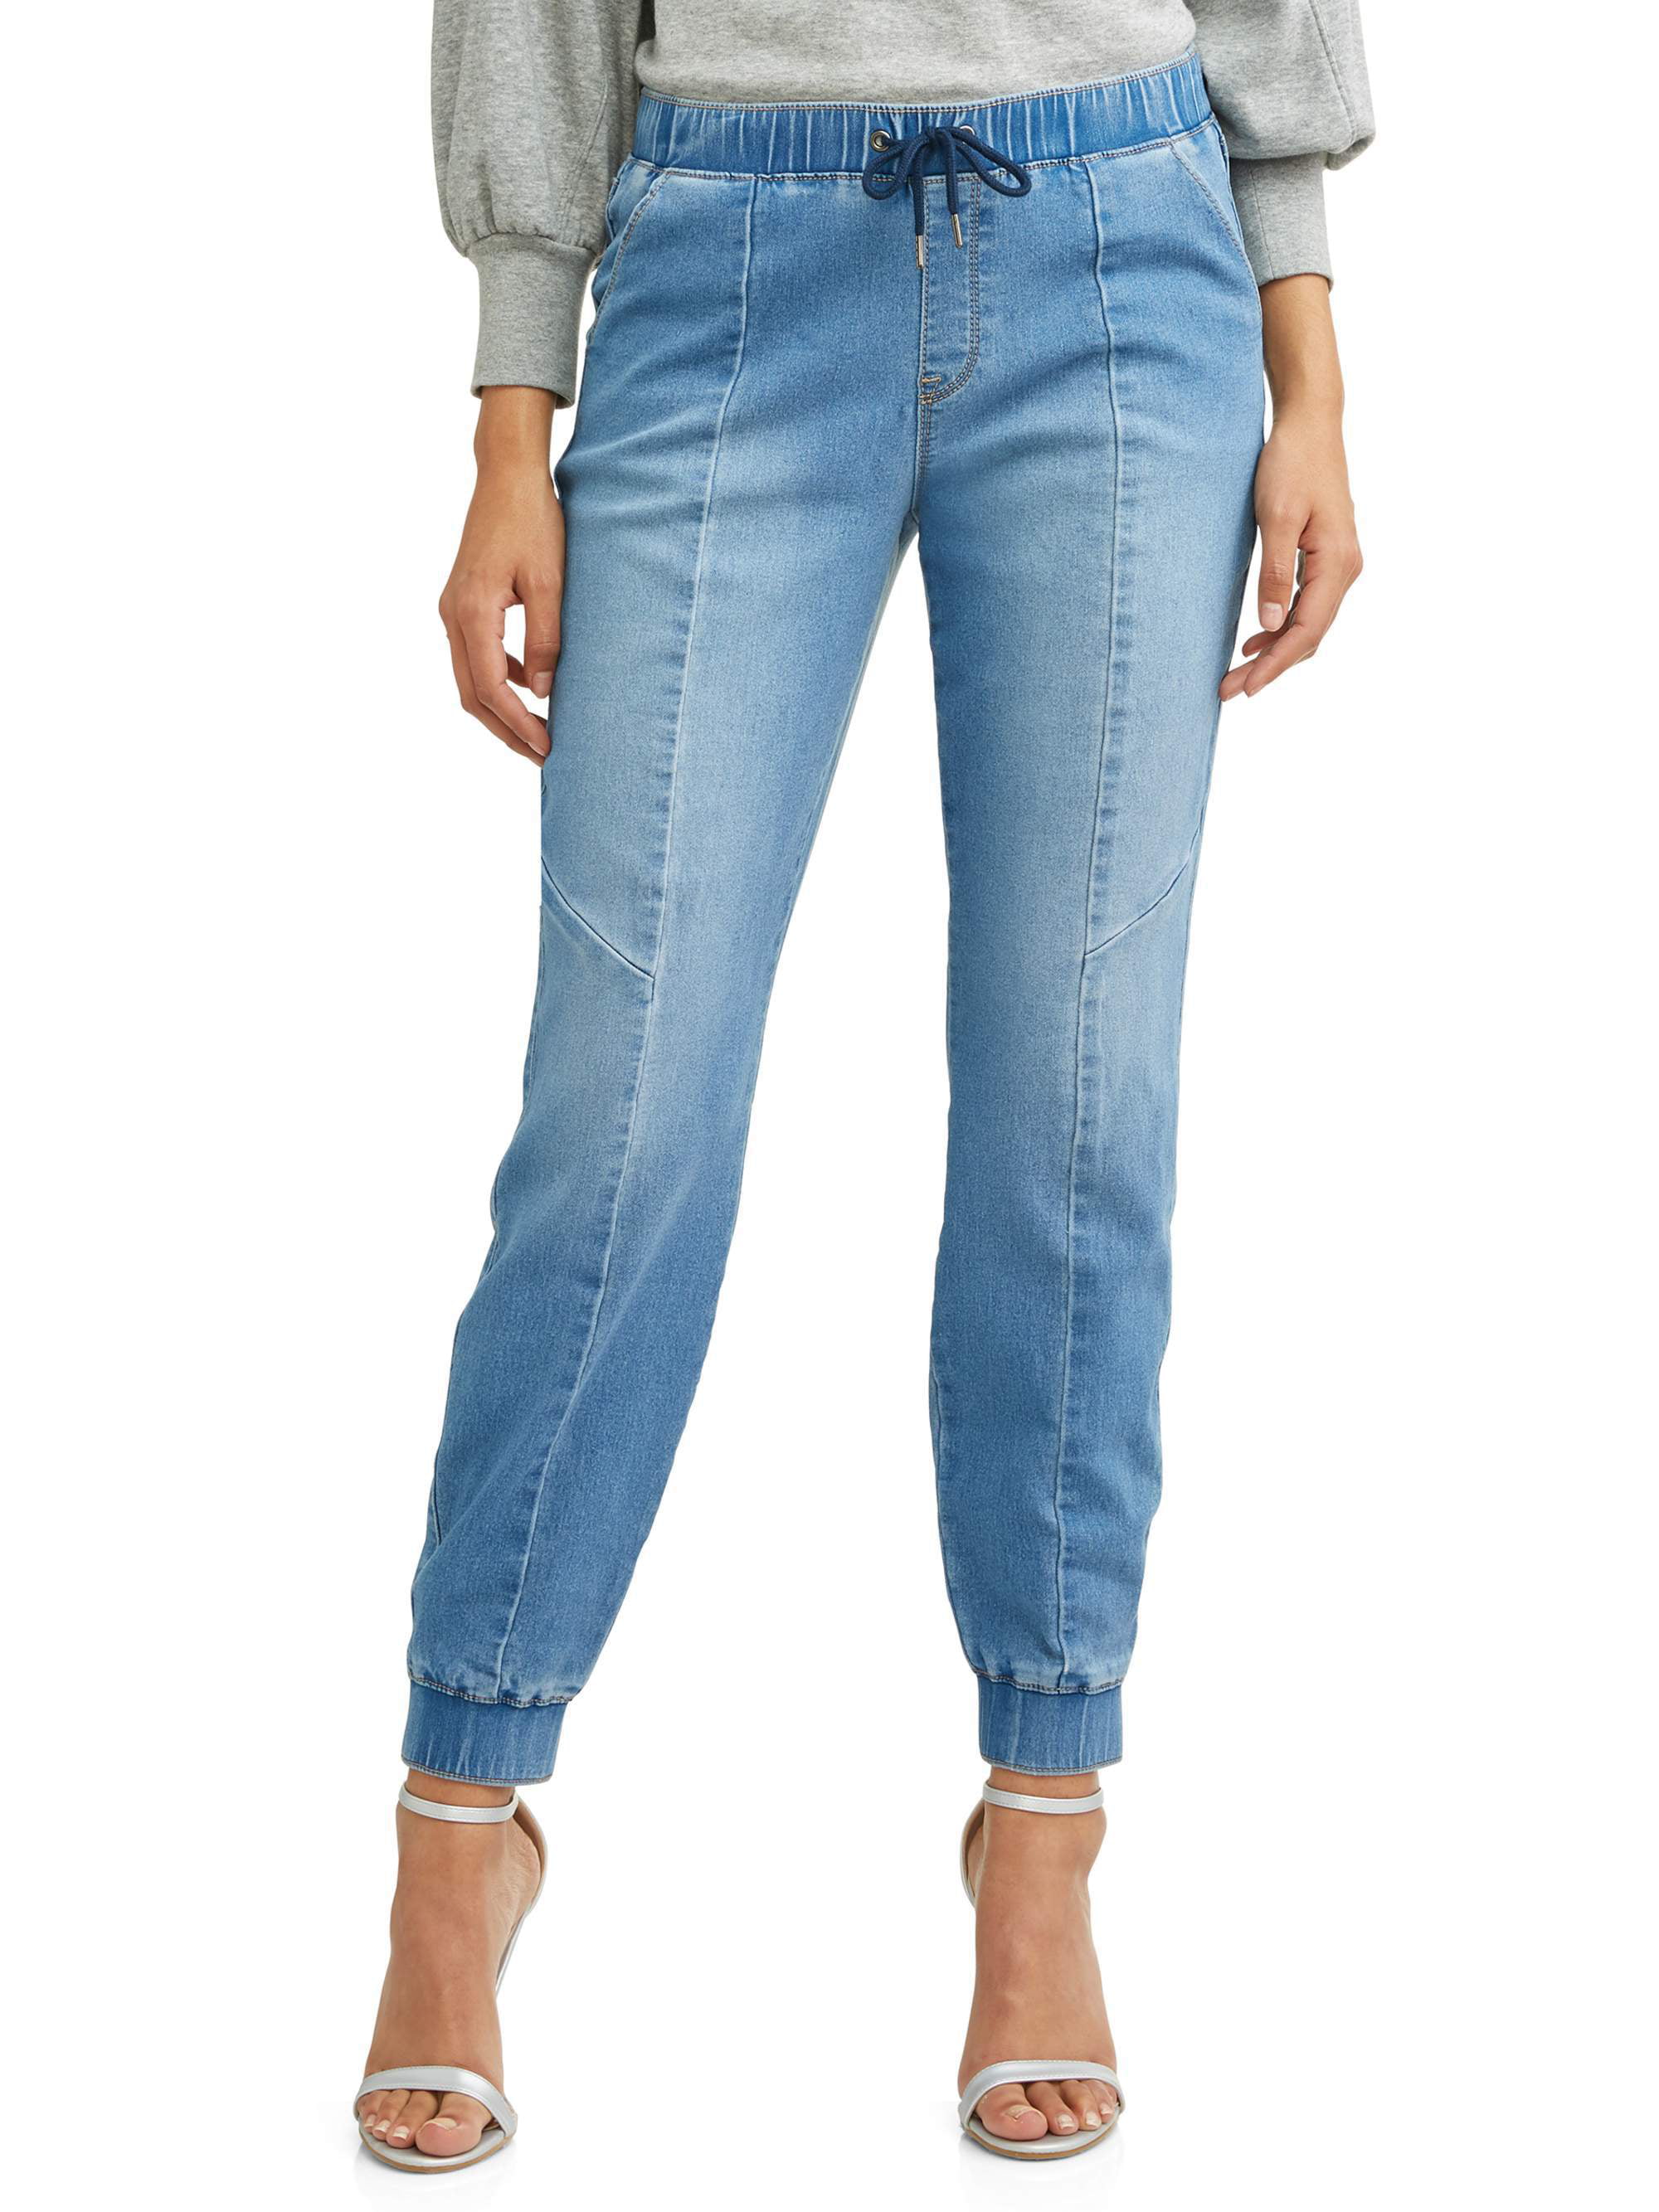 Sofia Jeans by Sofia Vergara at Walmart